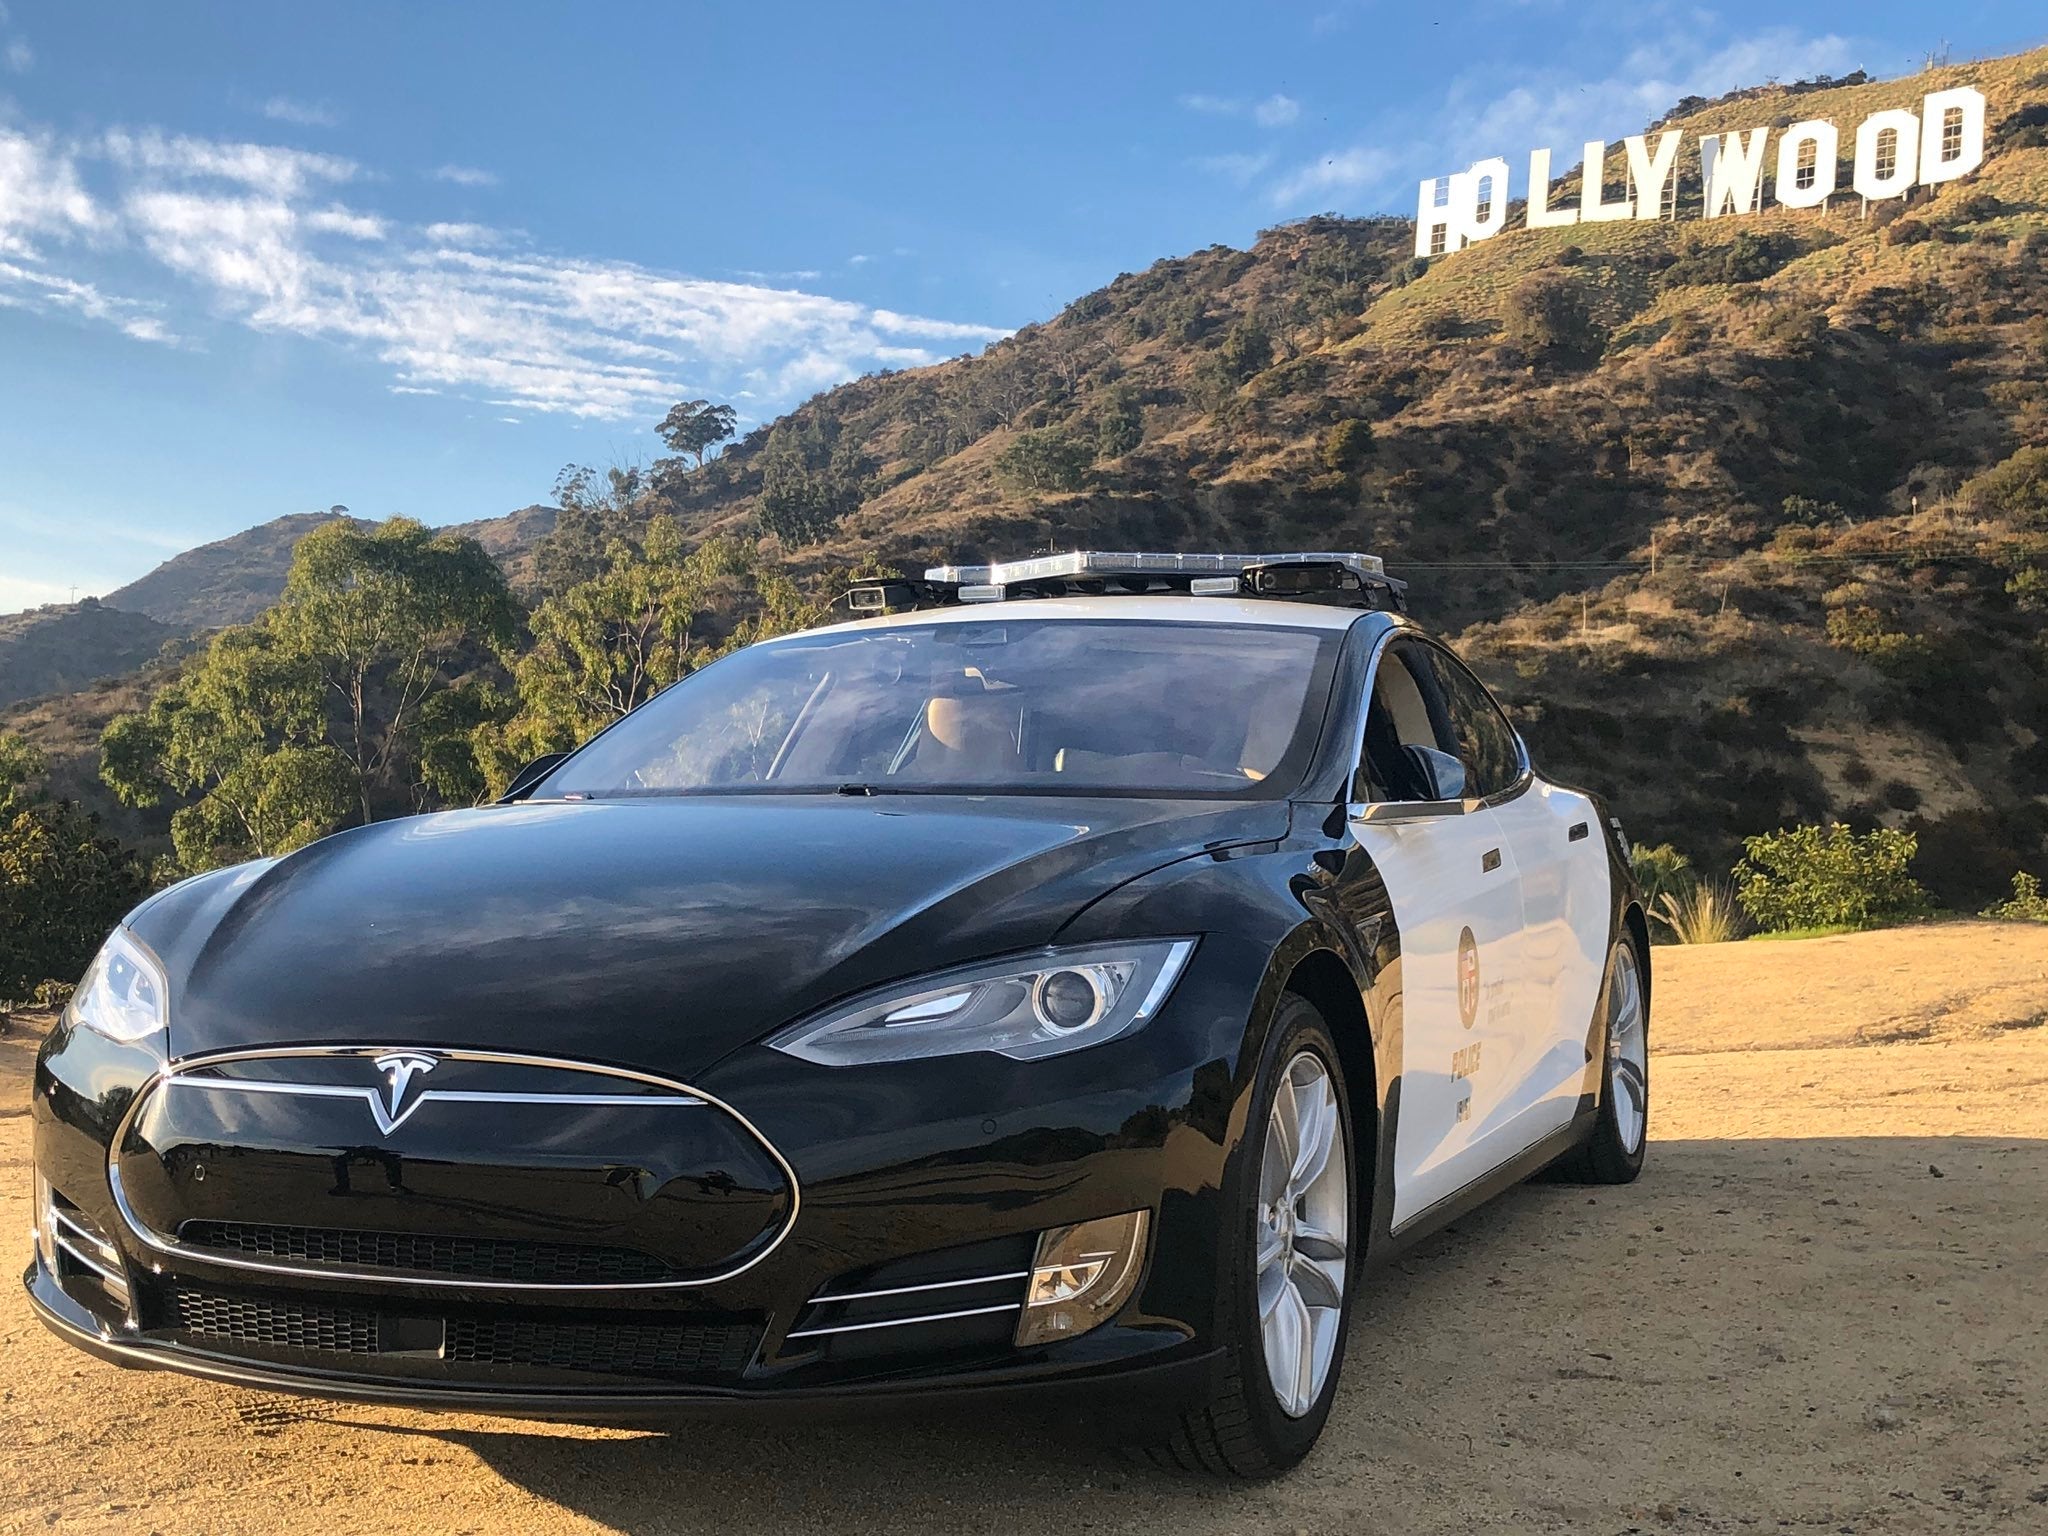 LAPD Hollywood Division tests out Tesla patrol car